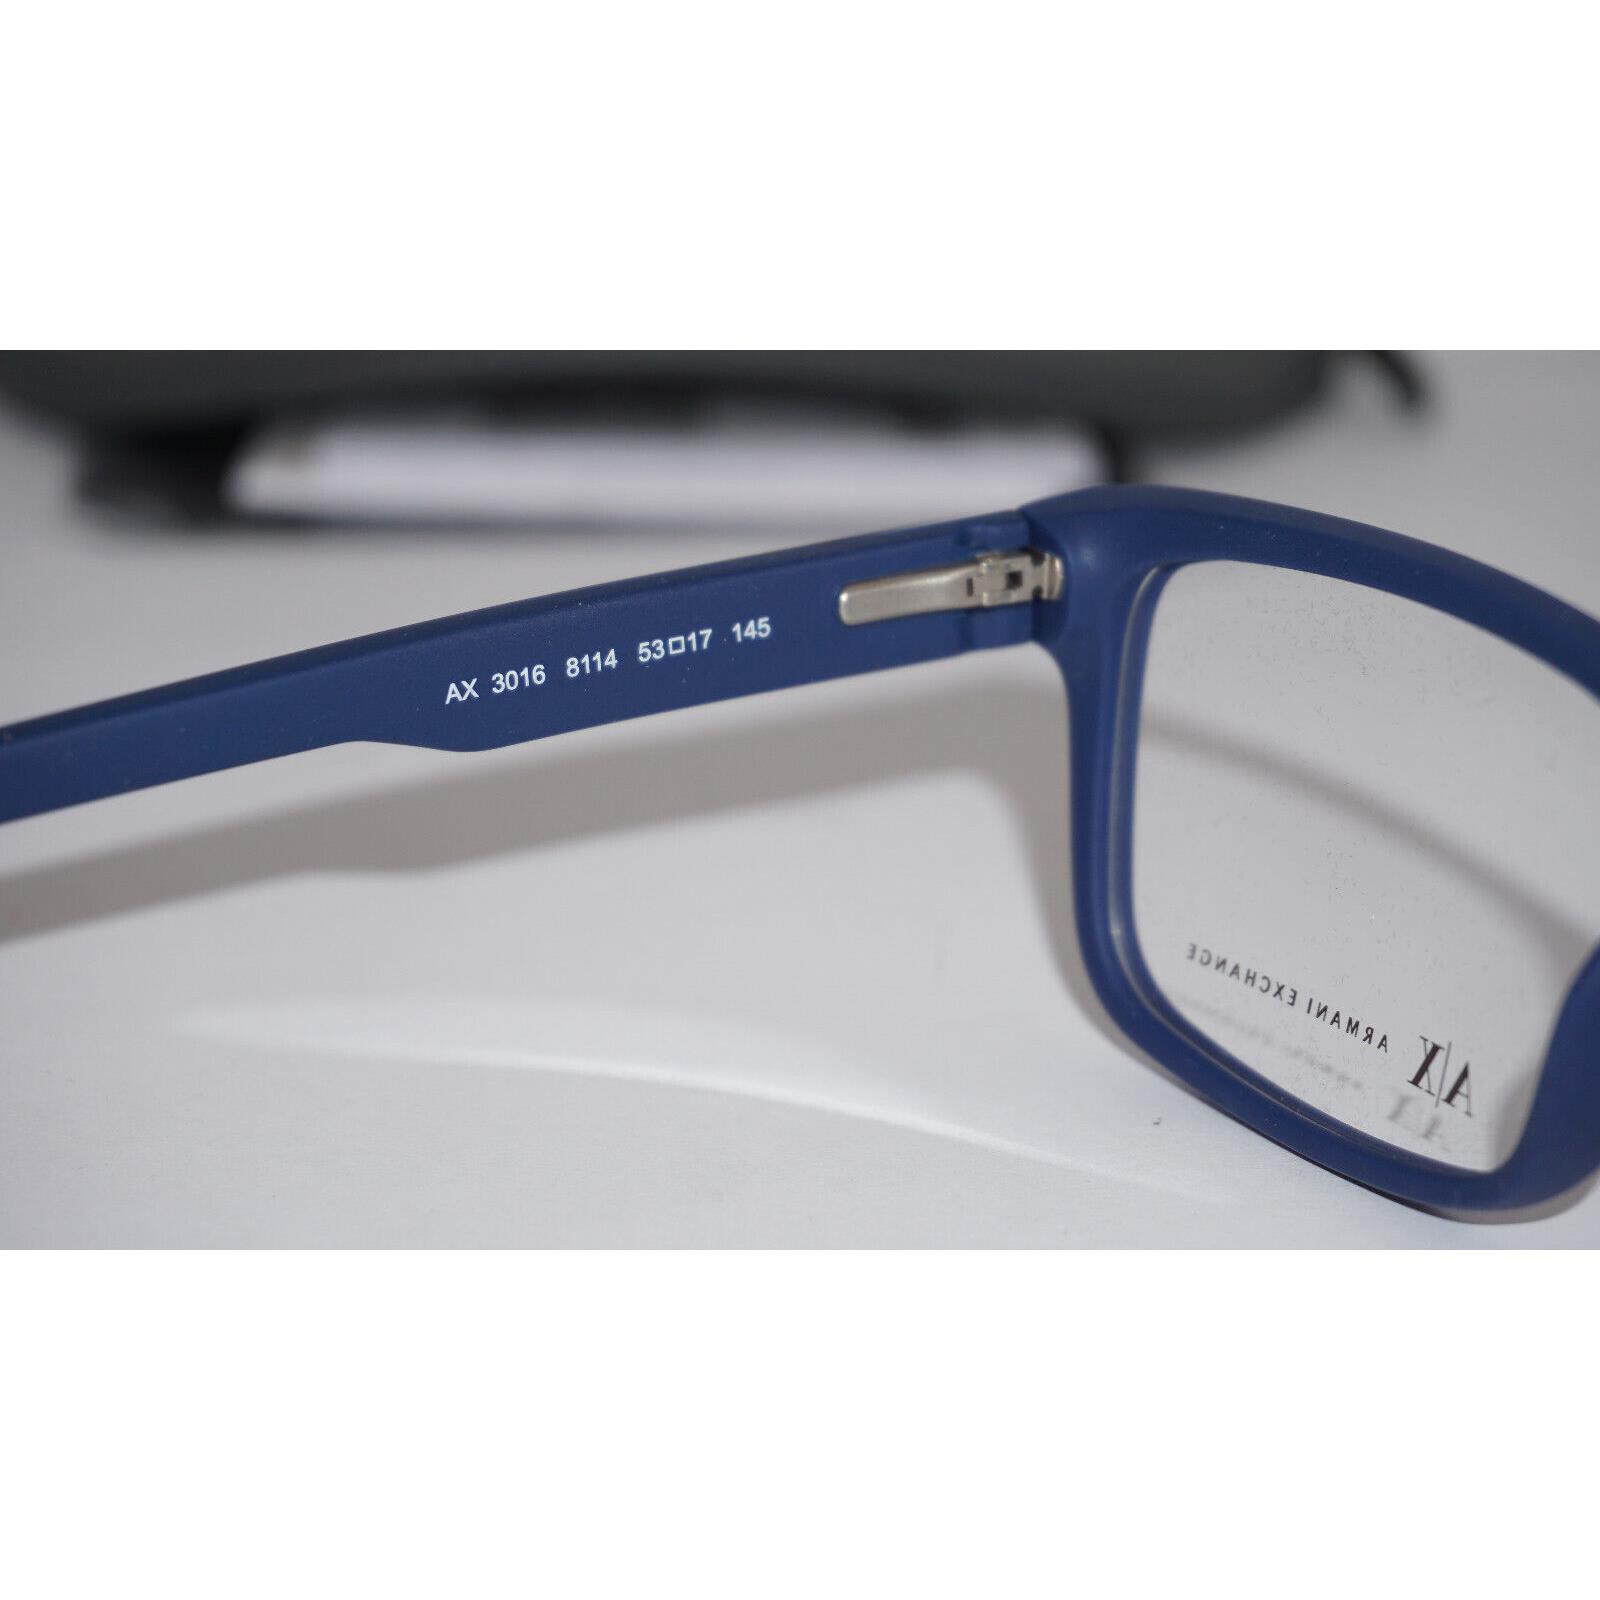 Armani Exchange eyeglasses  - Matte Navy Frame 6